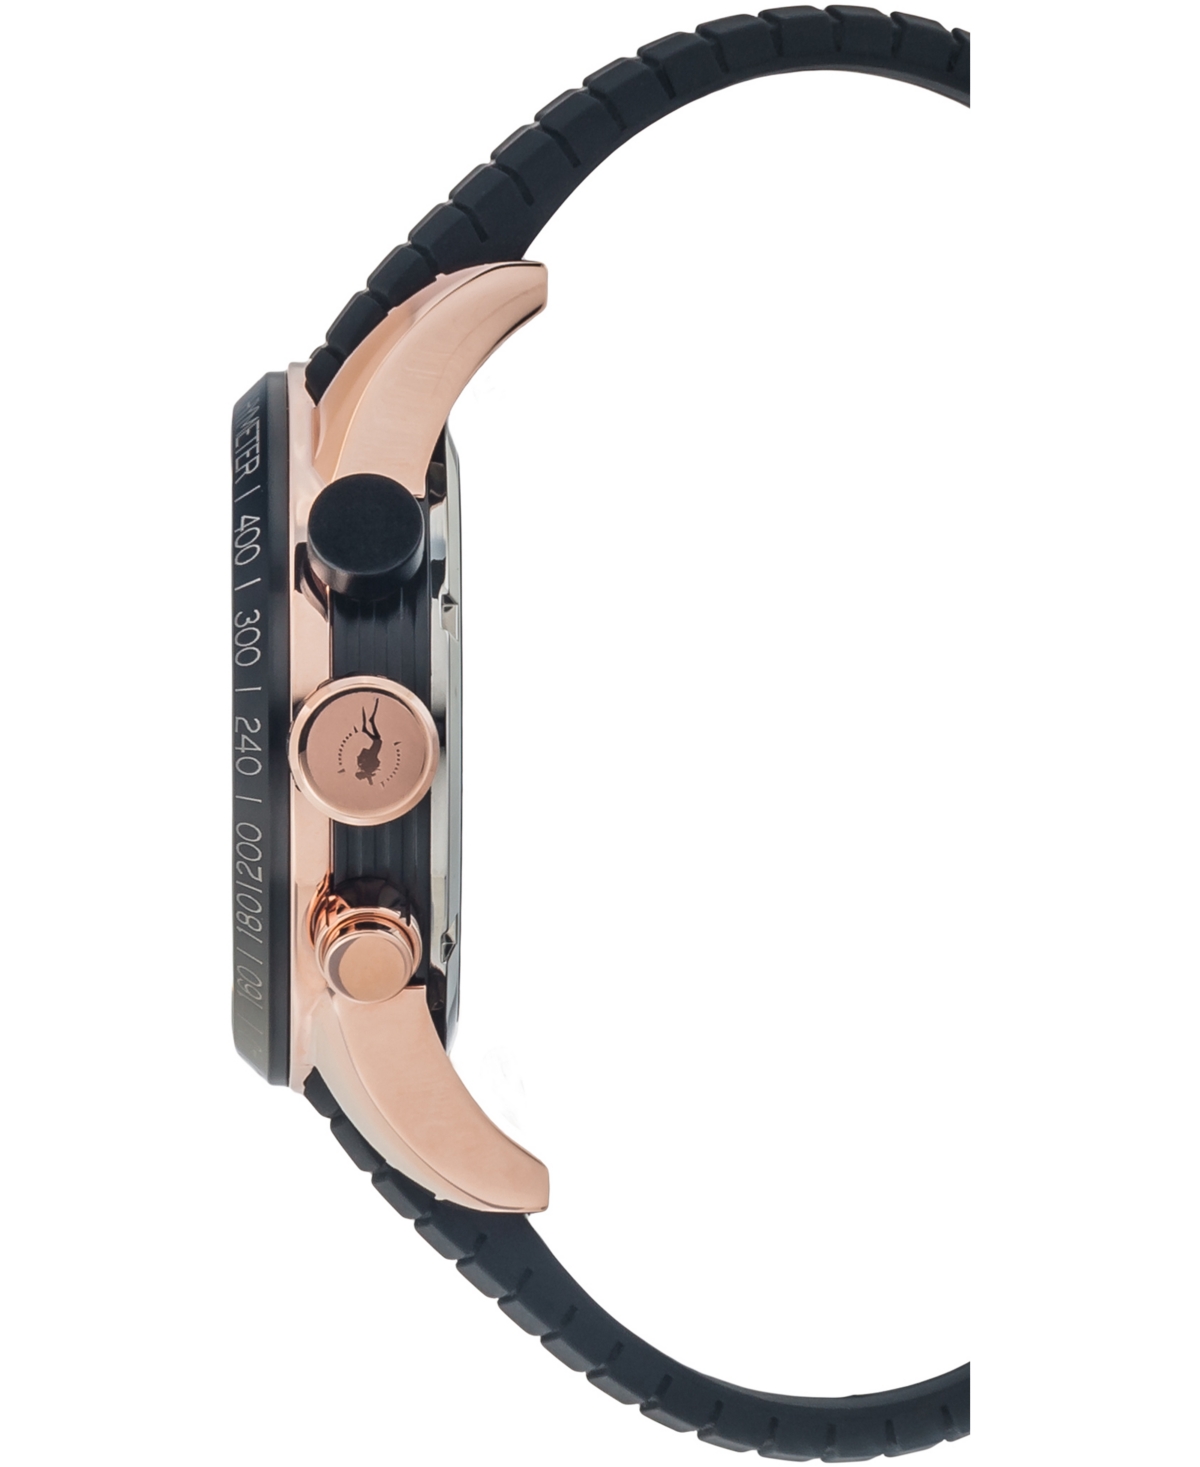 Shop Strumento Marino Men's Admiral Chronograph Black Silicone Performance Timepiece Watch 45mm